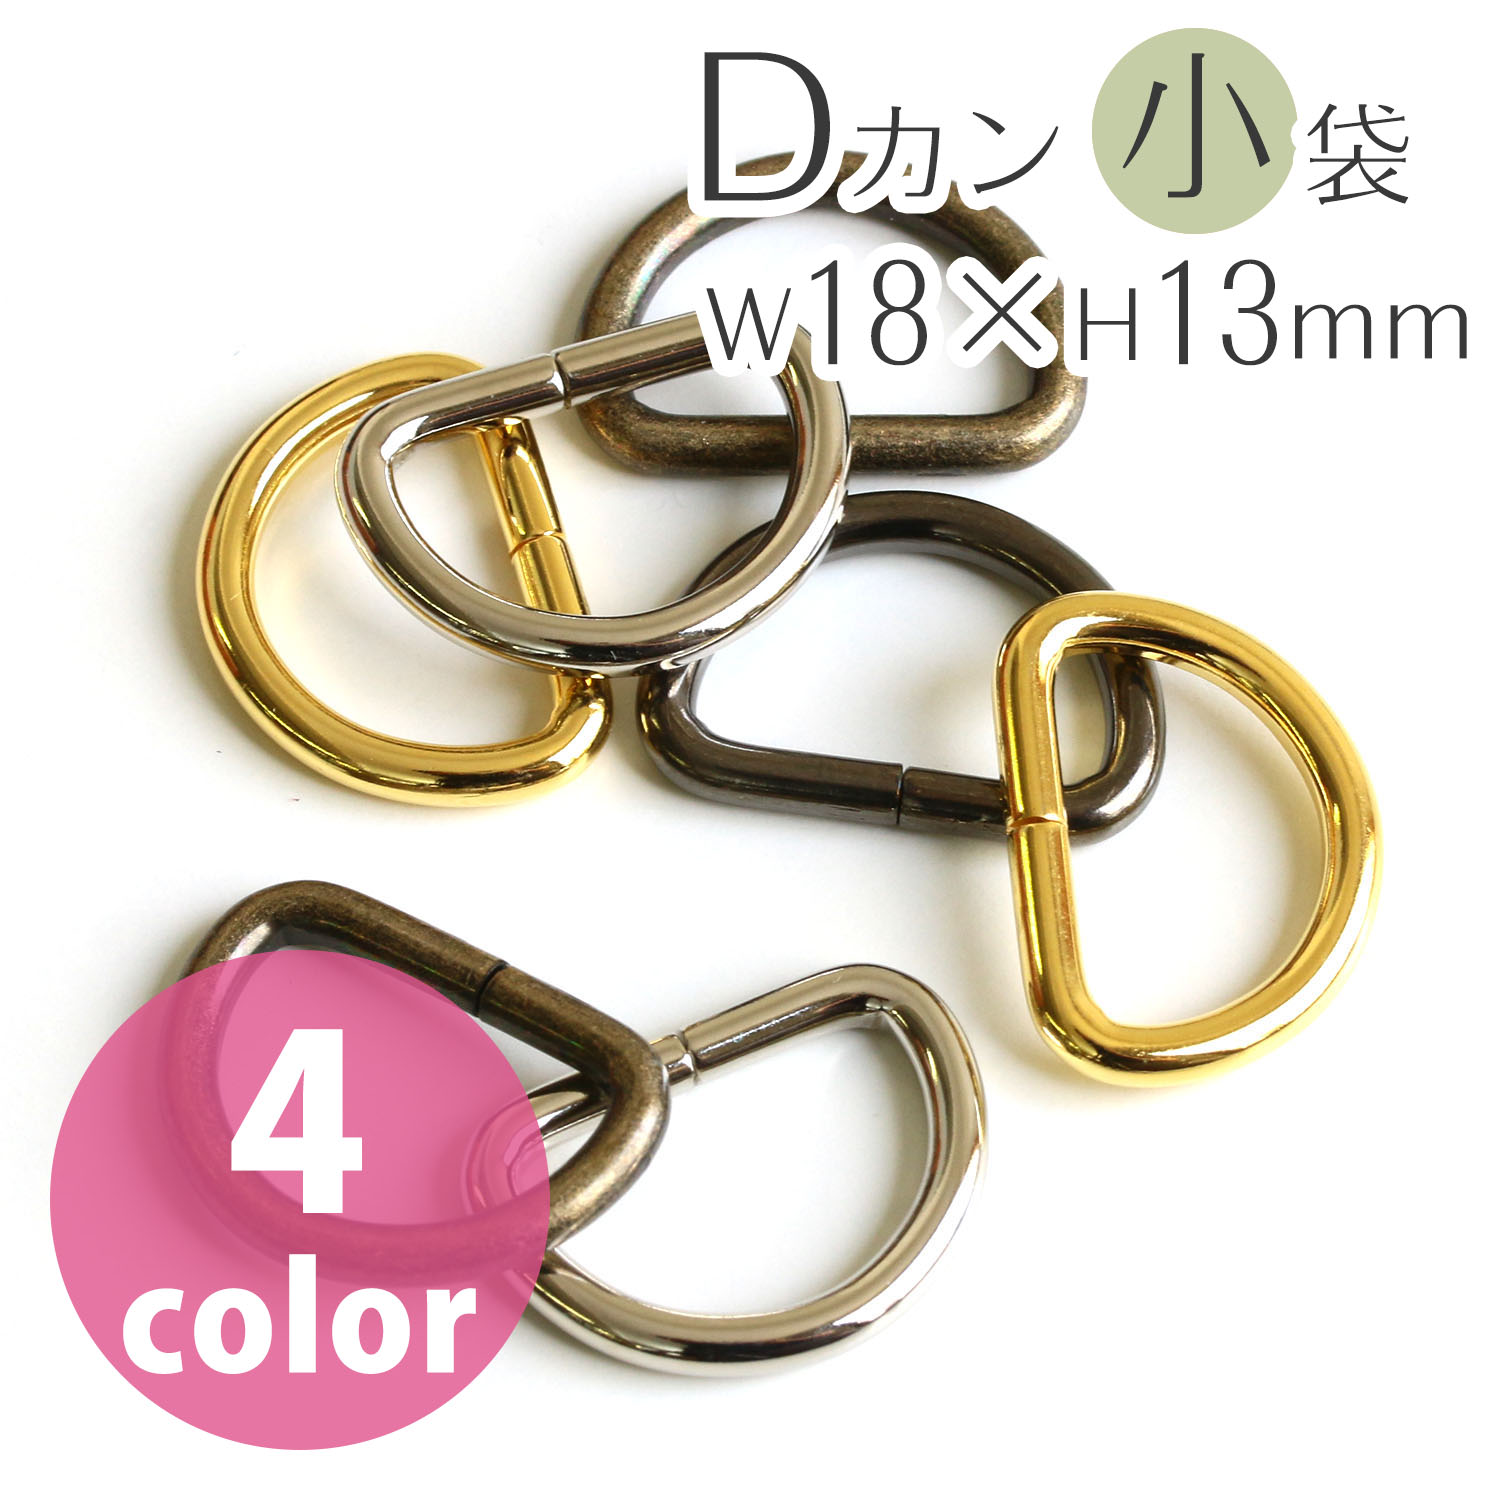 S22 D-Ring  18 x 13mm, diameter 3mm  (bag)